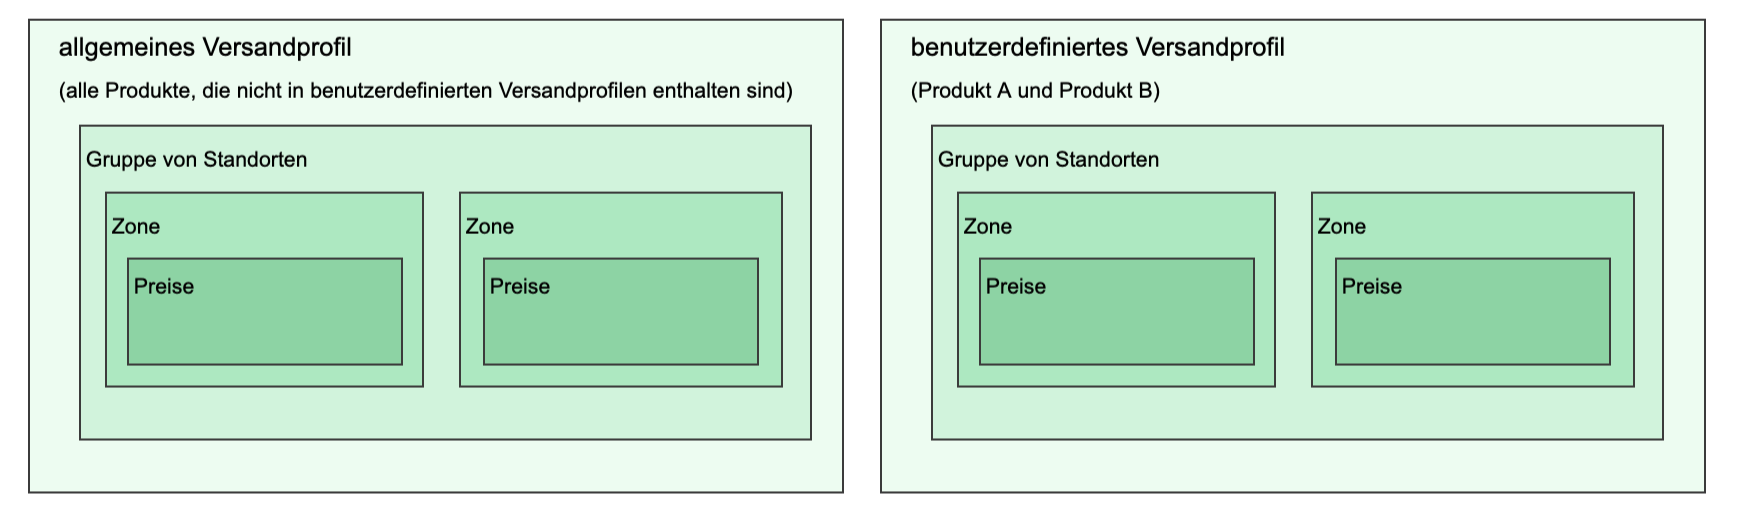 图- einer einfachen Versandprofilkonfiguration - einem allgemeinen profile和einem benutzerdefinierten profile